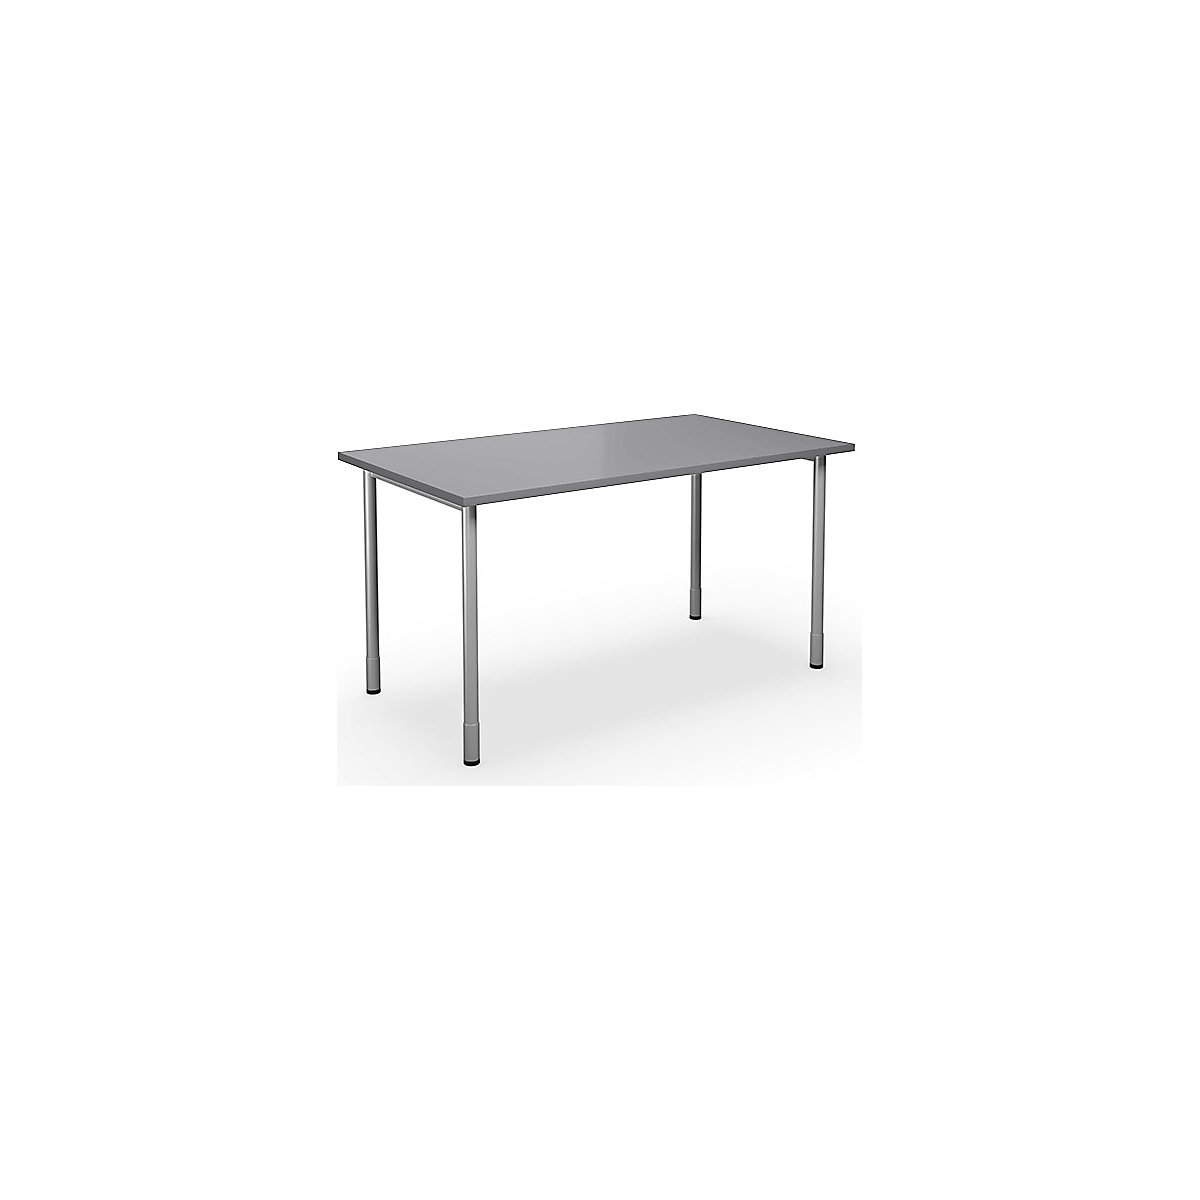 DUO-C multi-purpose desk, straight tabletop, WxD 1400 x 800 mm, light grey, silver-8